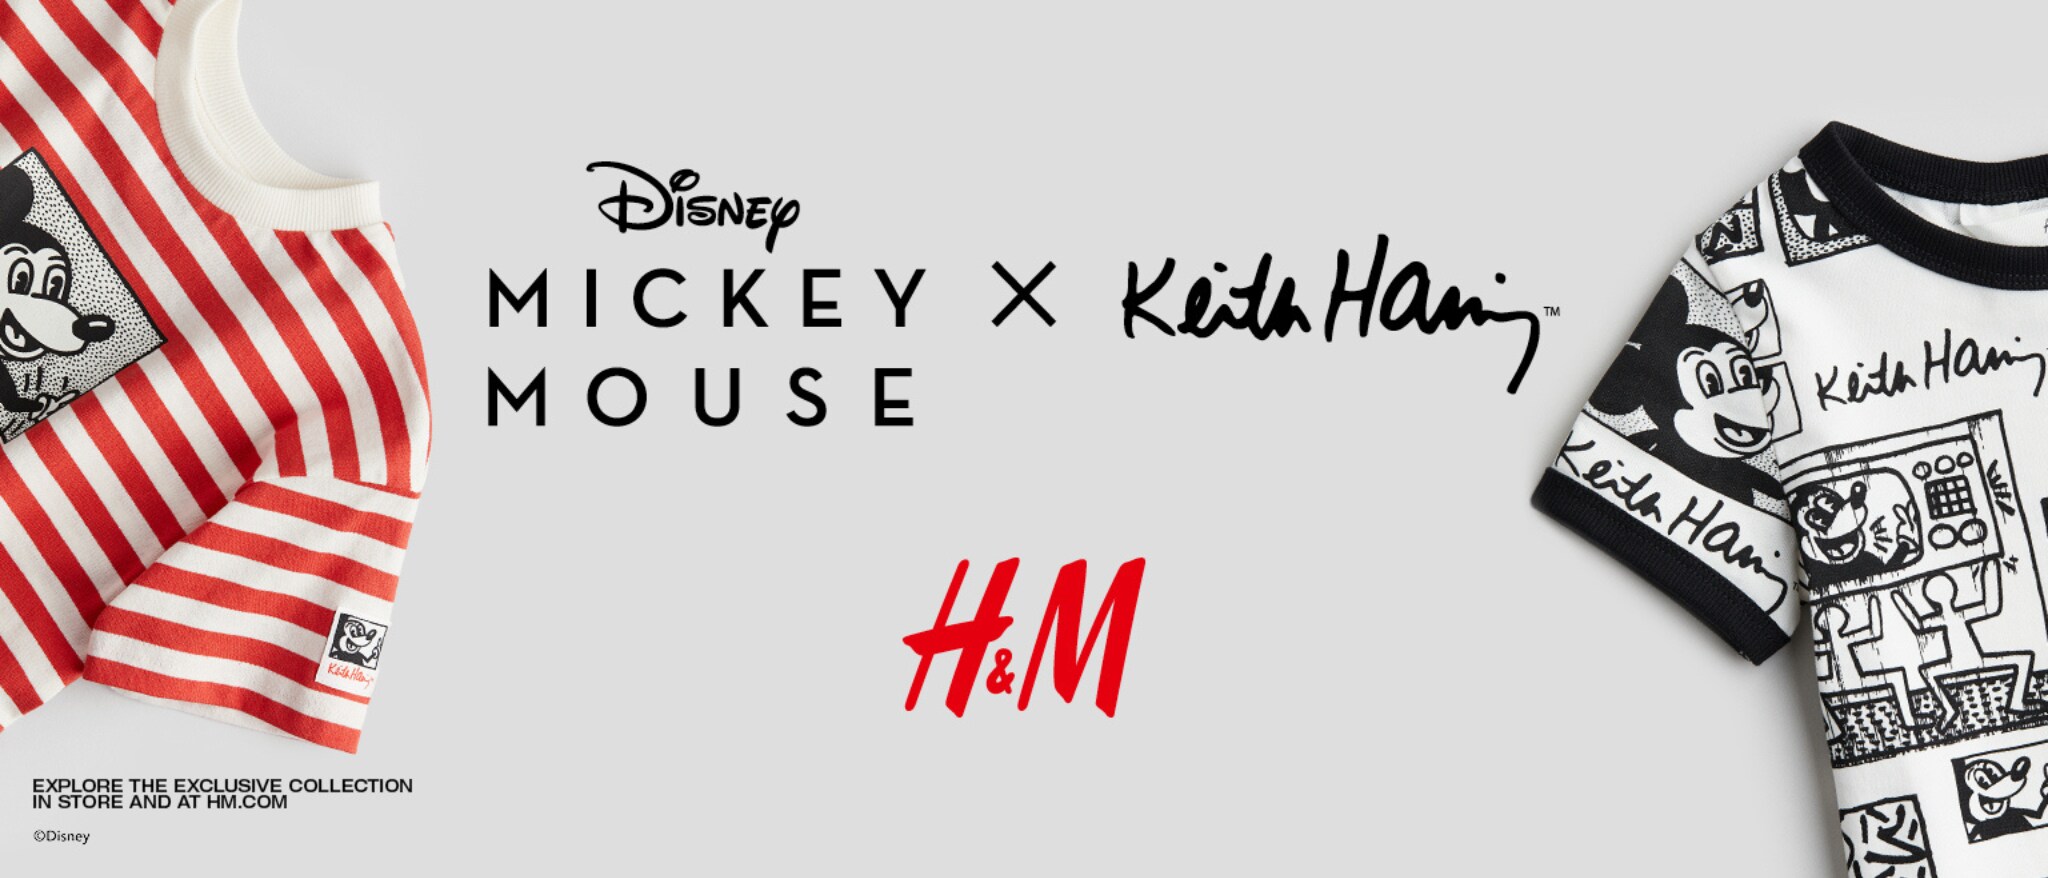 Homepage Hero Banner - H&M Keith Haring Launch Final Draft MY 